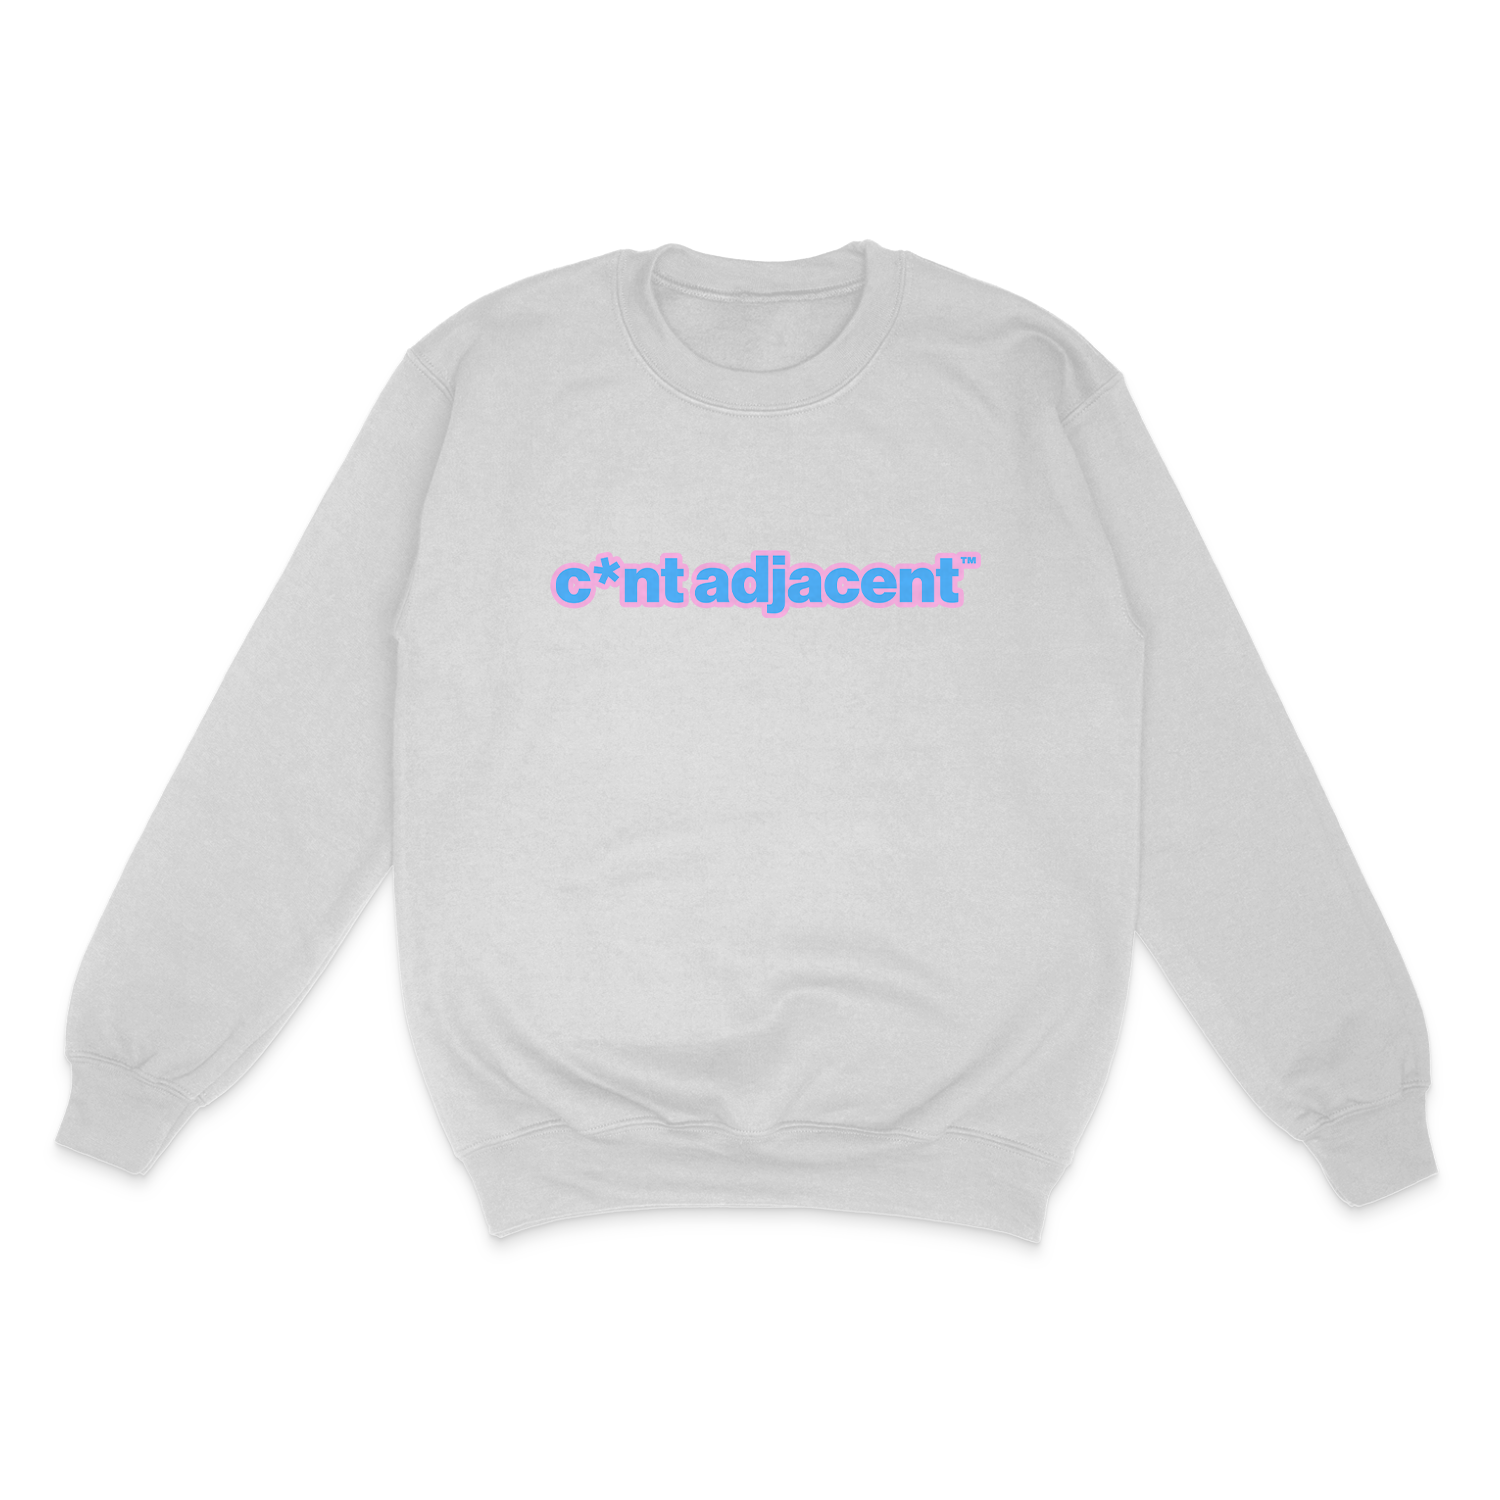 C*nt Adjacent Crewneck Sweatshirt